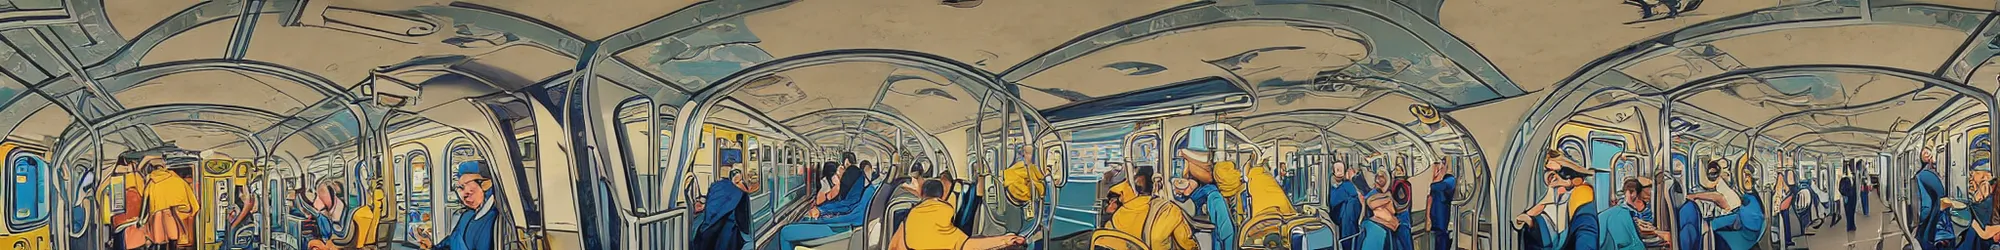 Image similar to full train graffiti showing retrofuturism escher motif